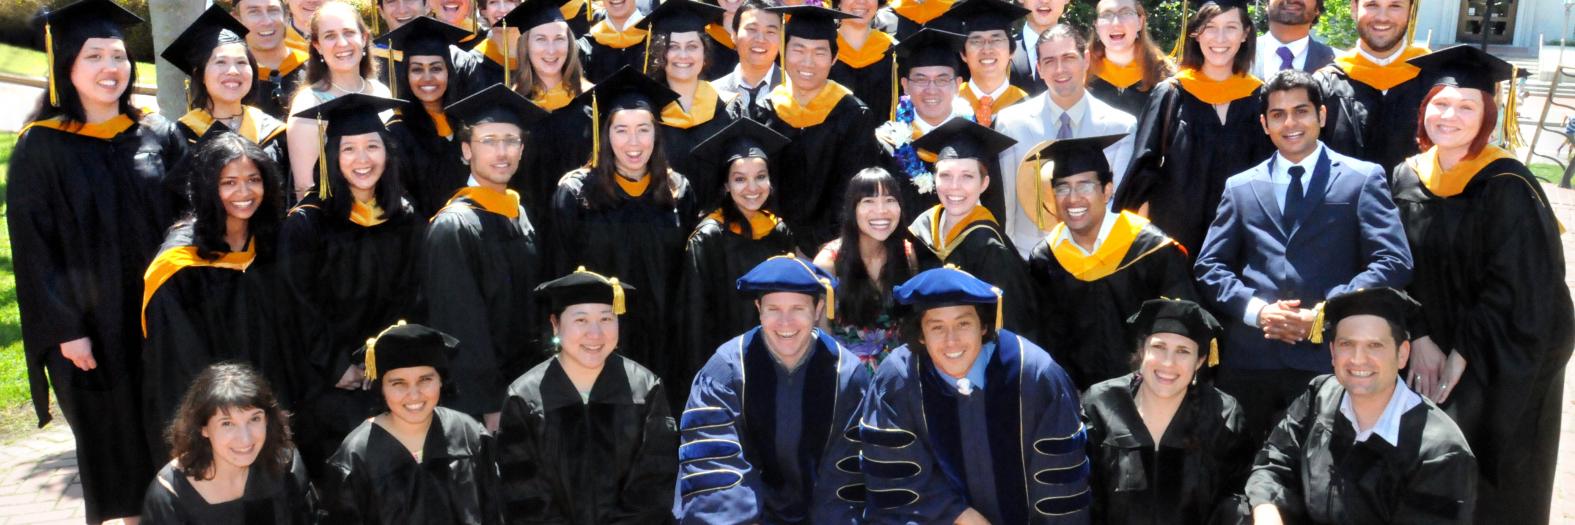 The graduating class of 2012: 38 MIMS graduates and 7 Ph.D.s.